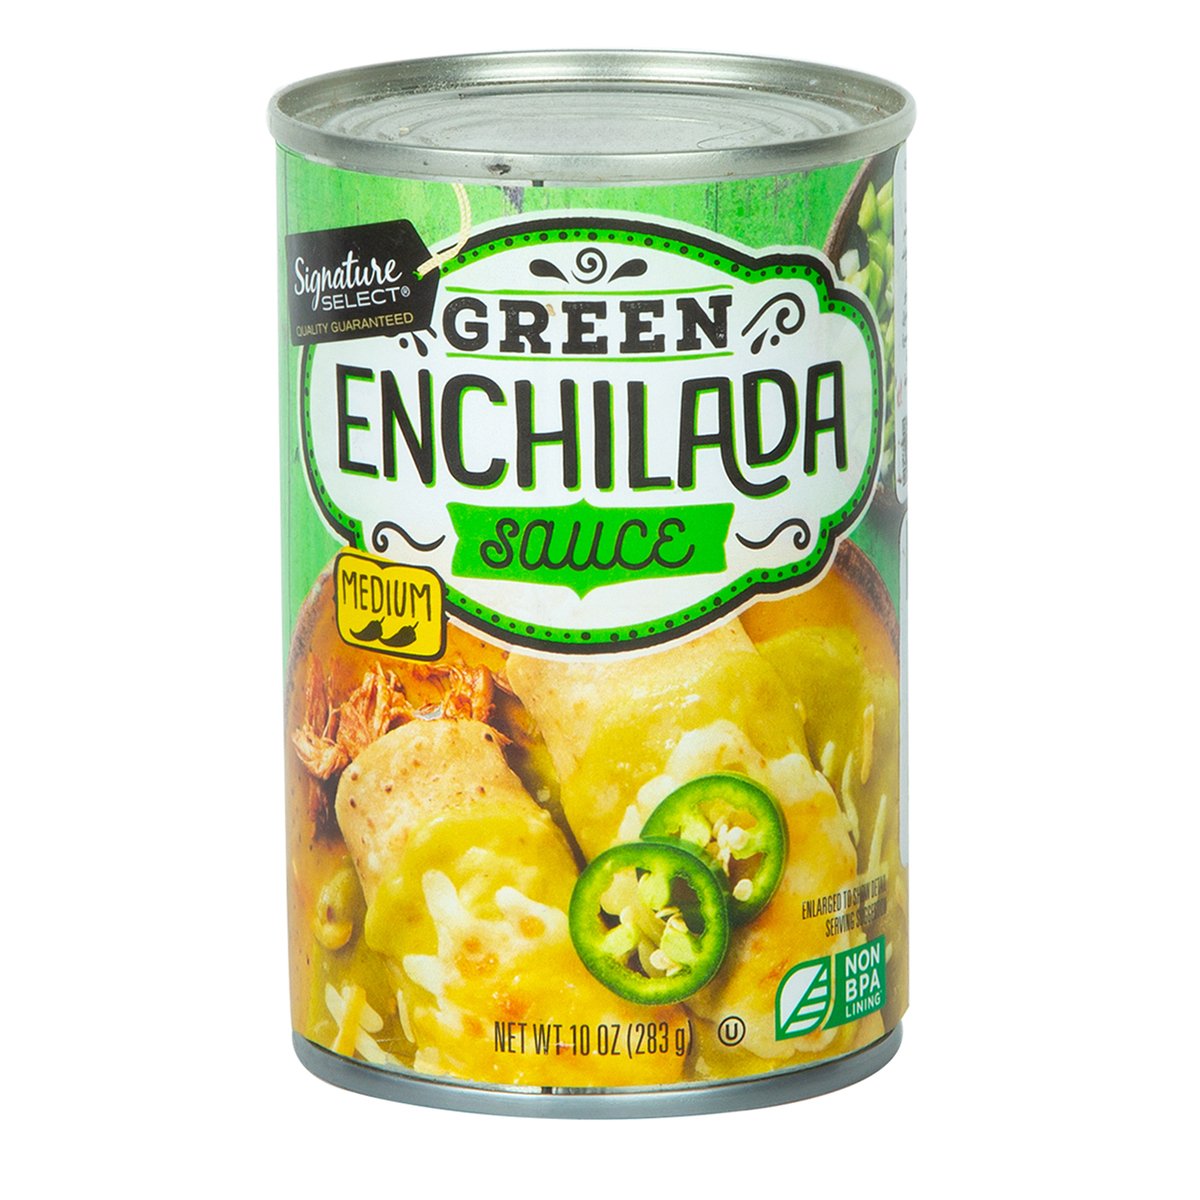 Signature Select Green Enchilada Sauce 283 g